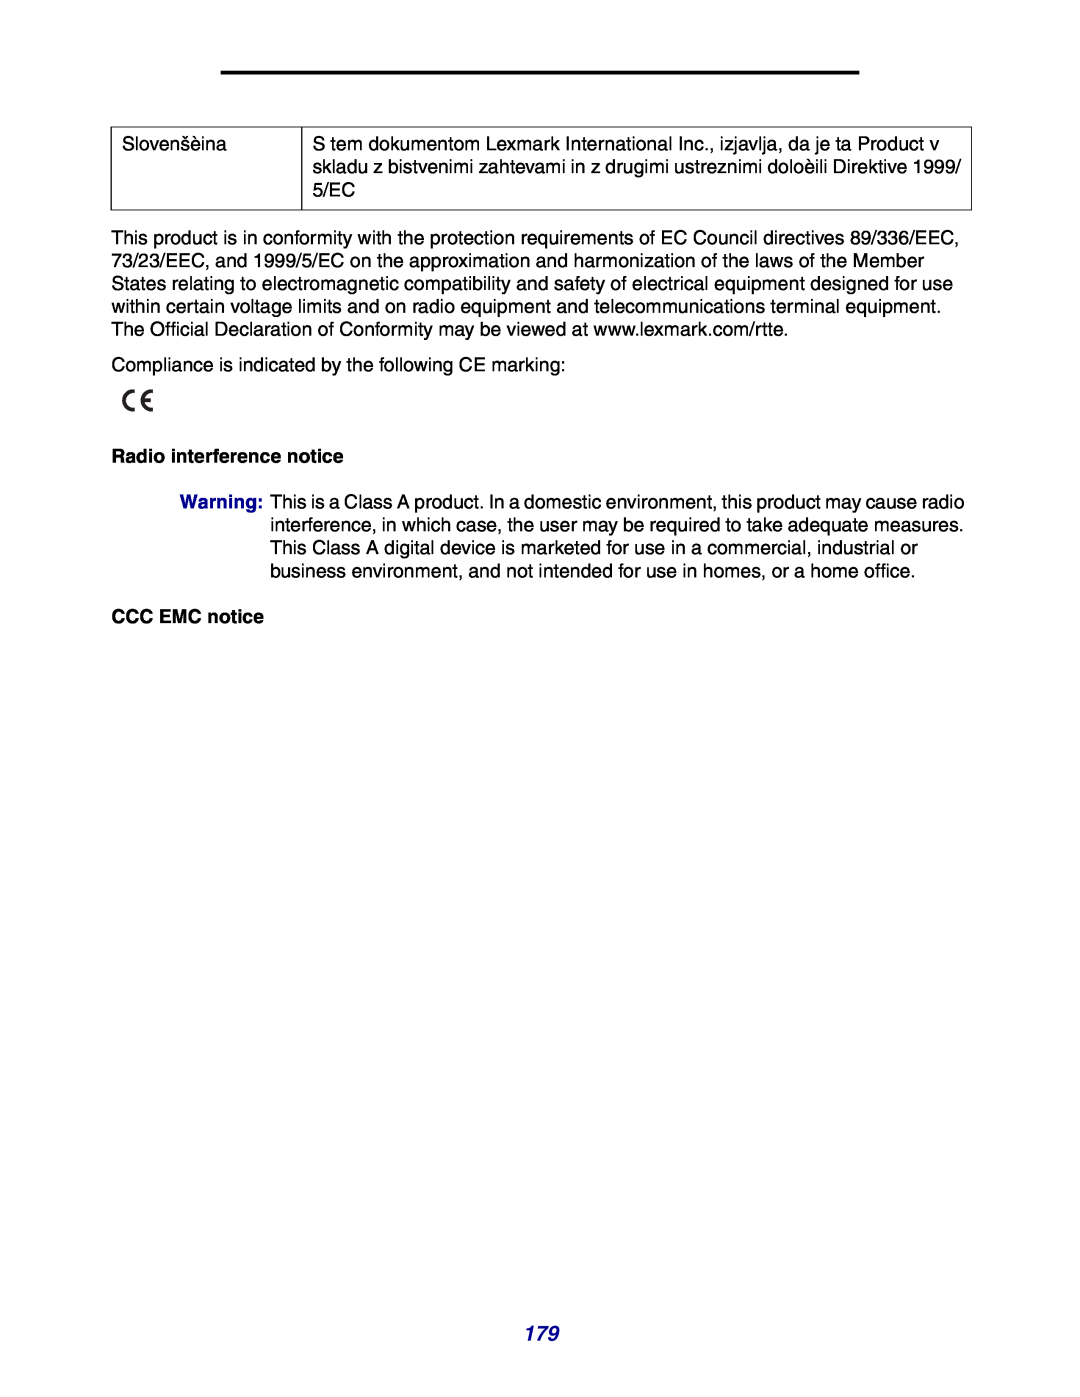 Lexmark X642e manual Radio interference notice, CCC EMC notice 